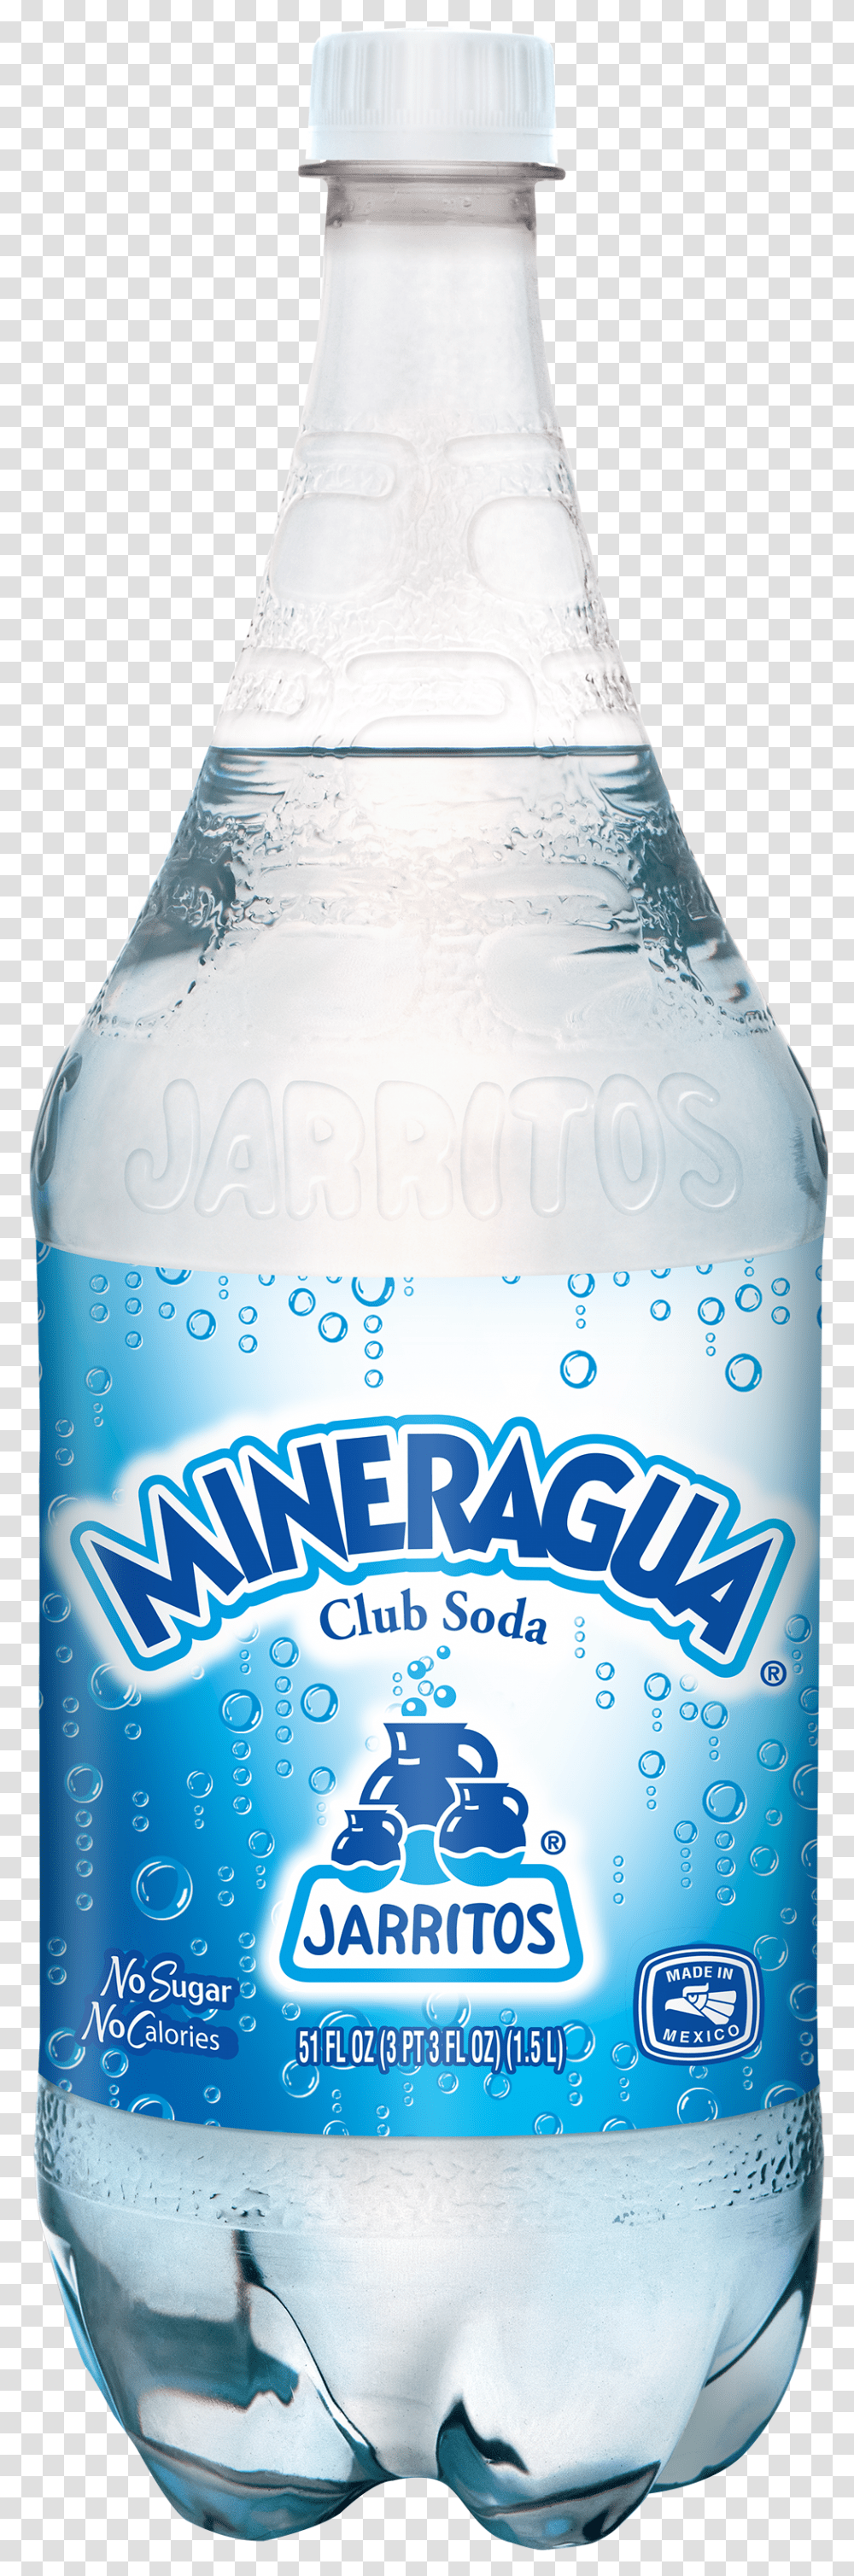 Jarritos Mineragua Club Soda Glass Bottle, Mineral Water, Beverage, Water Bottle, Drink Transparent Png